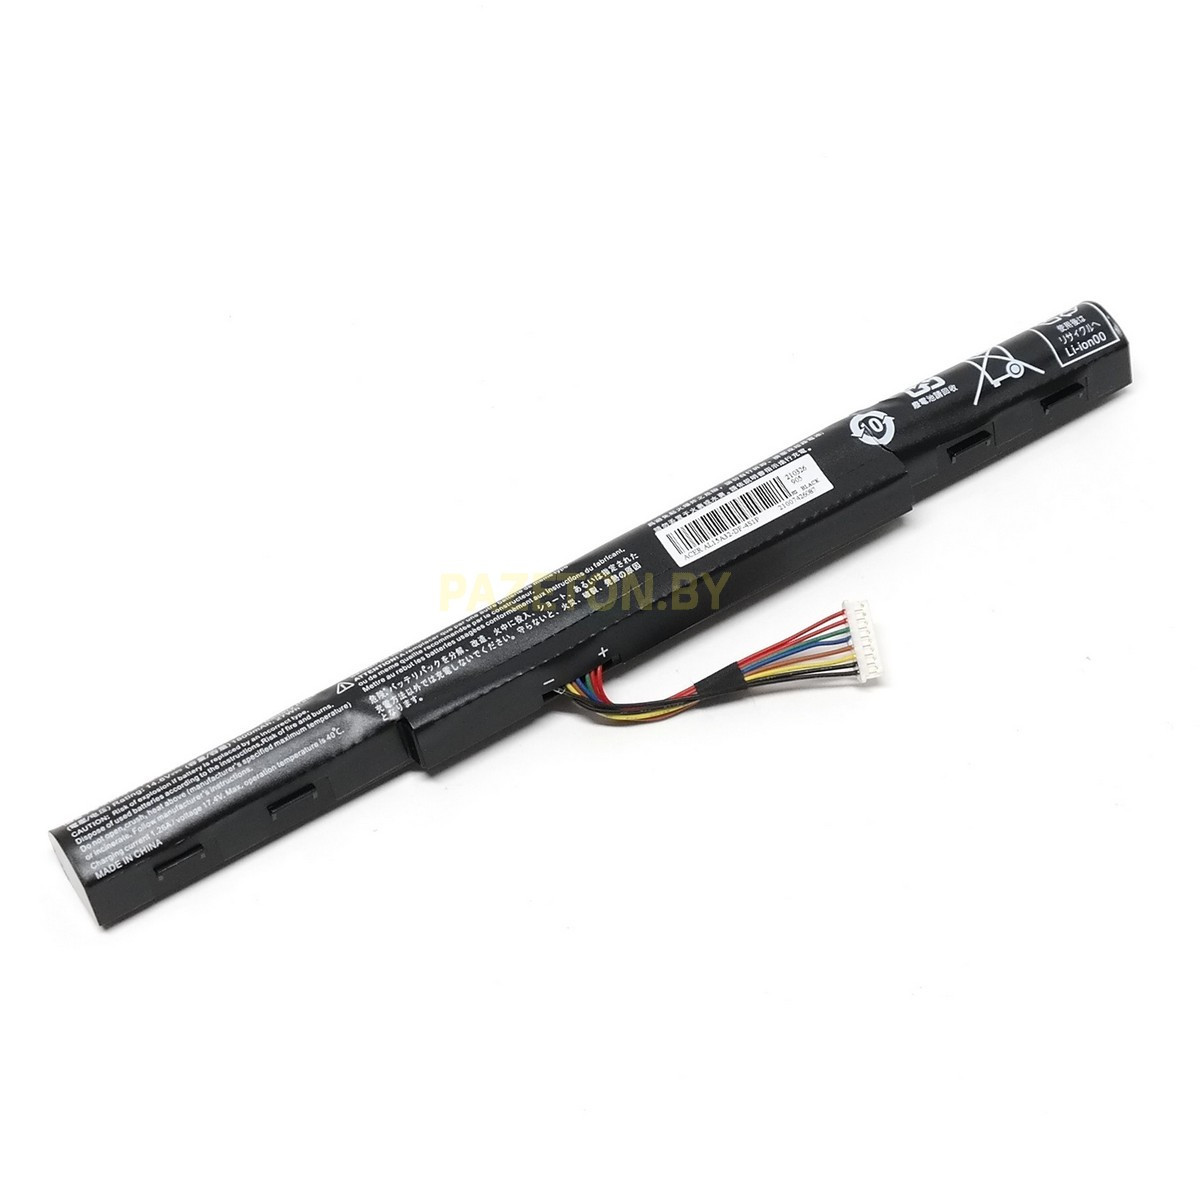 Батарея для ноутбука Acer Aspire E5-522, E5-522G li-ion 14,8v 27wh черный